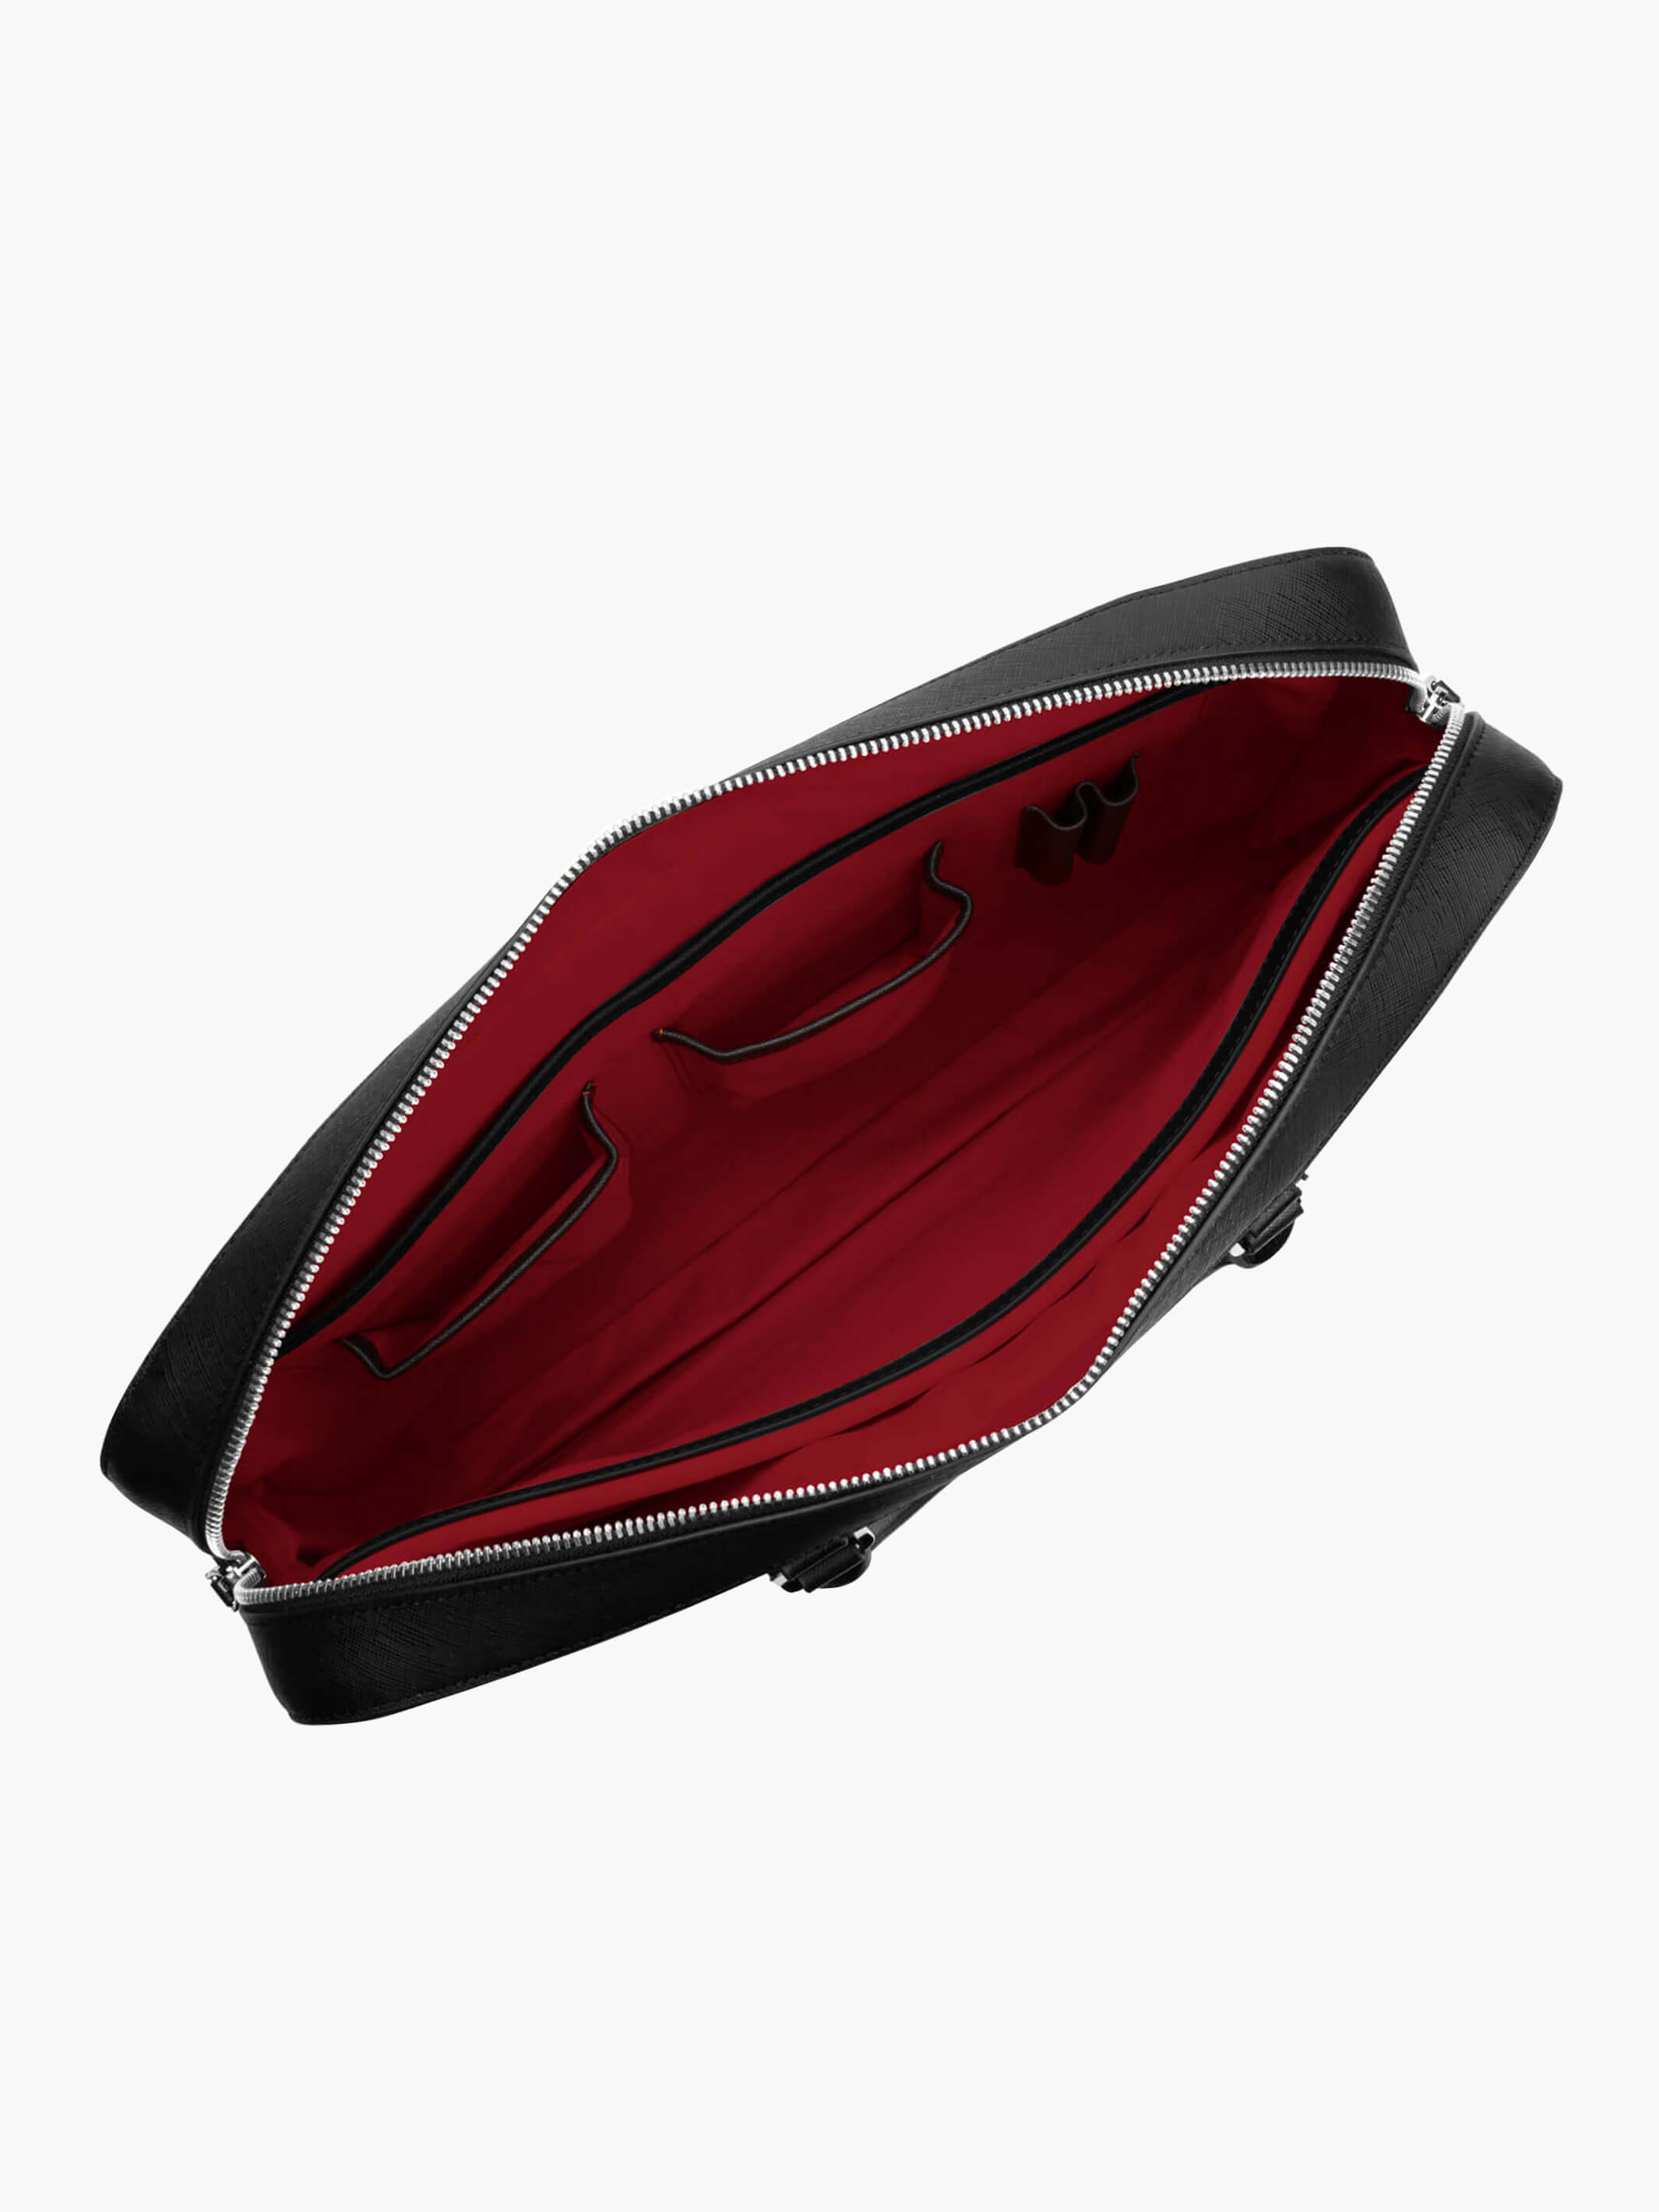 Maverick & Co. - Manhattan Leather Briefcase #color_black-racing-red